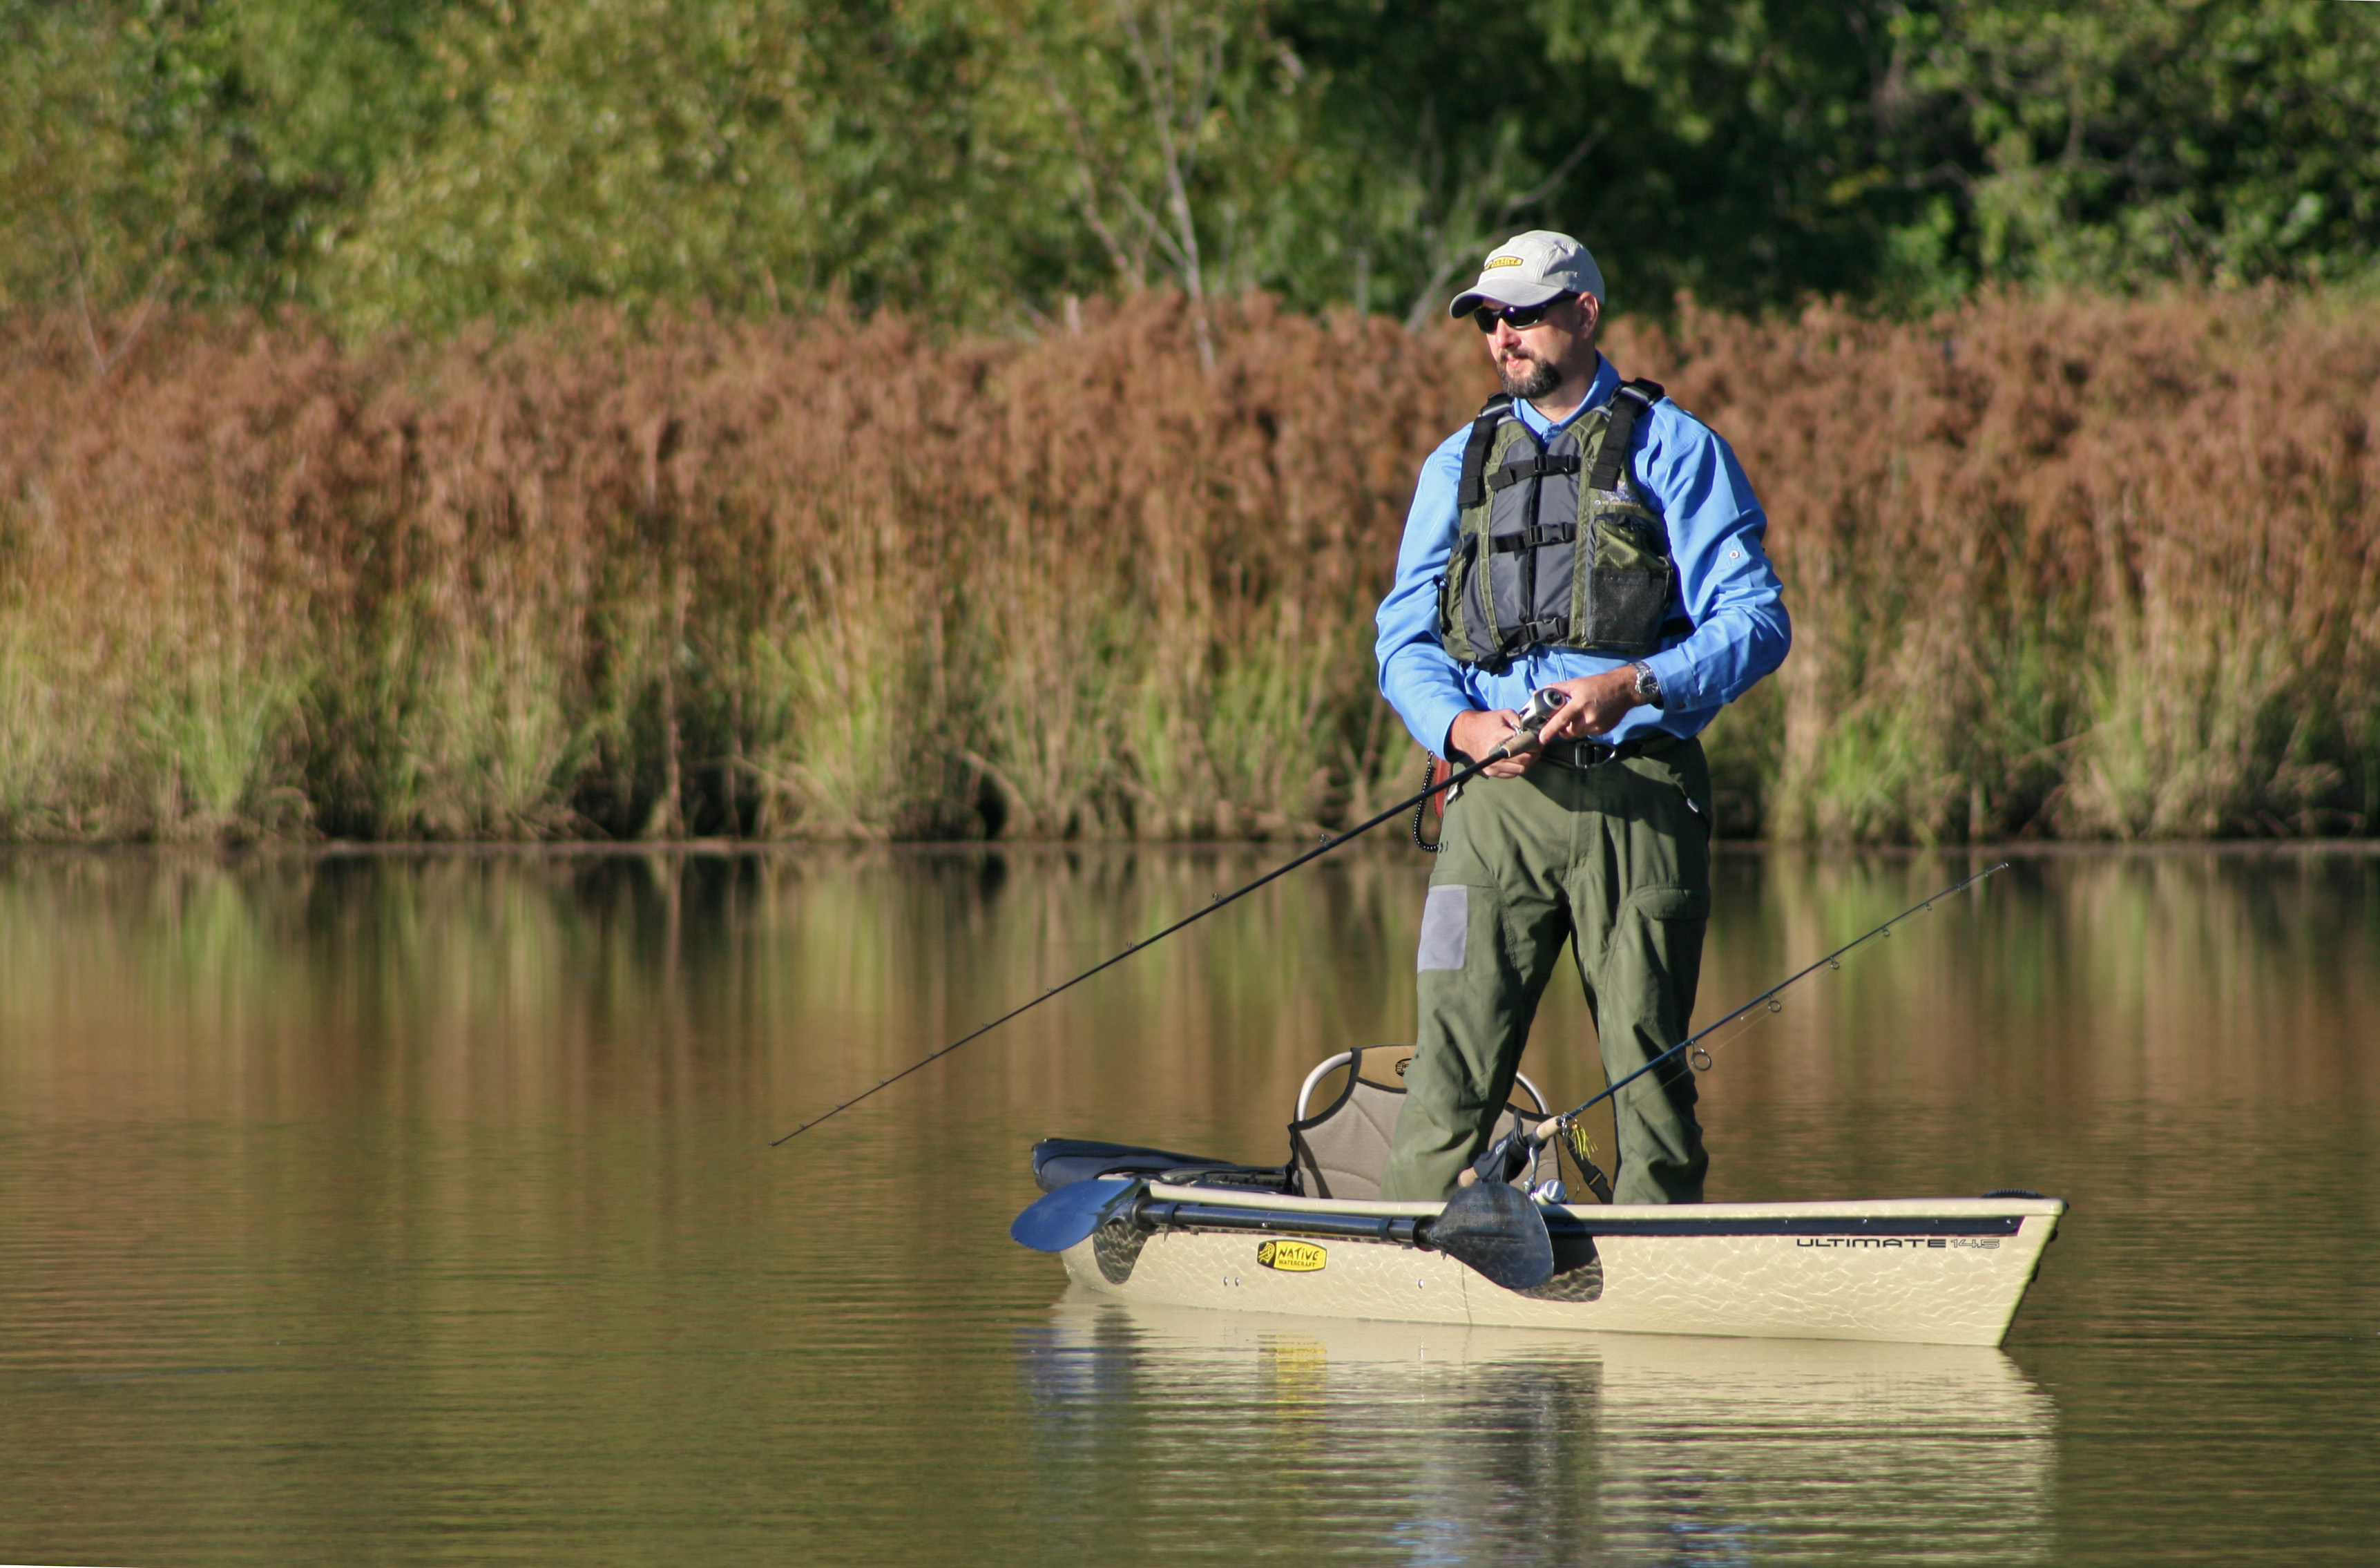 Gear Up Fall Kayak Fishing Season – The ACK Blog